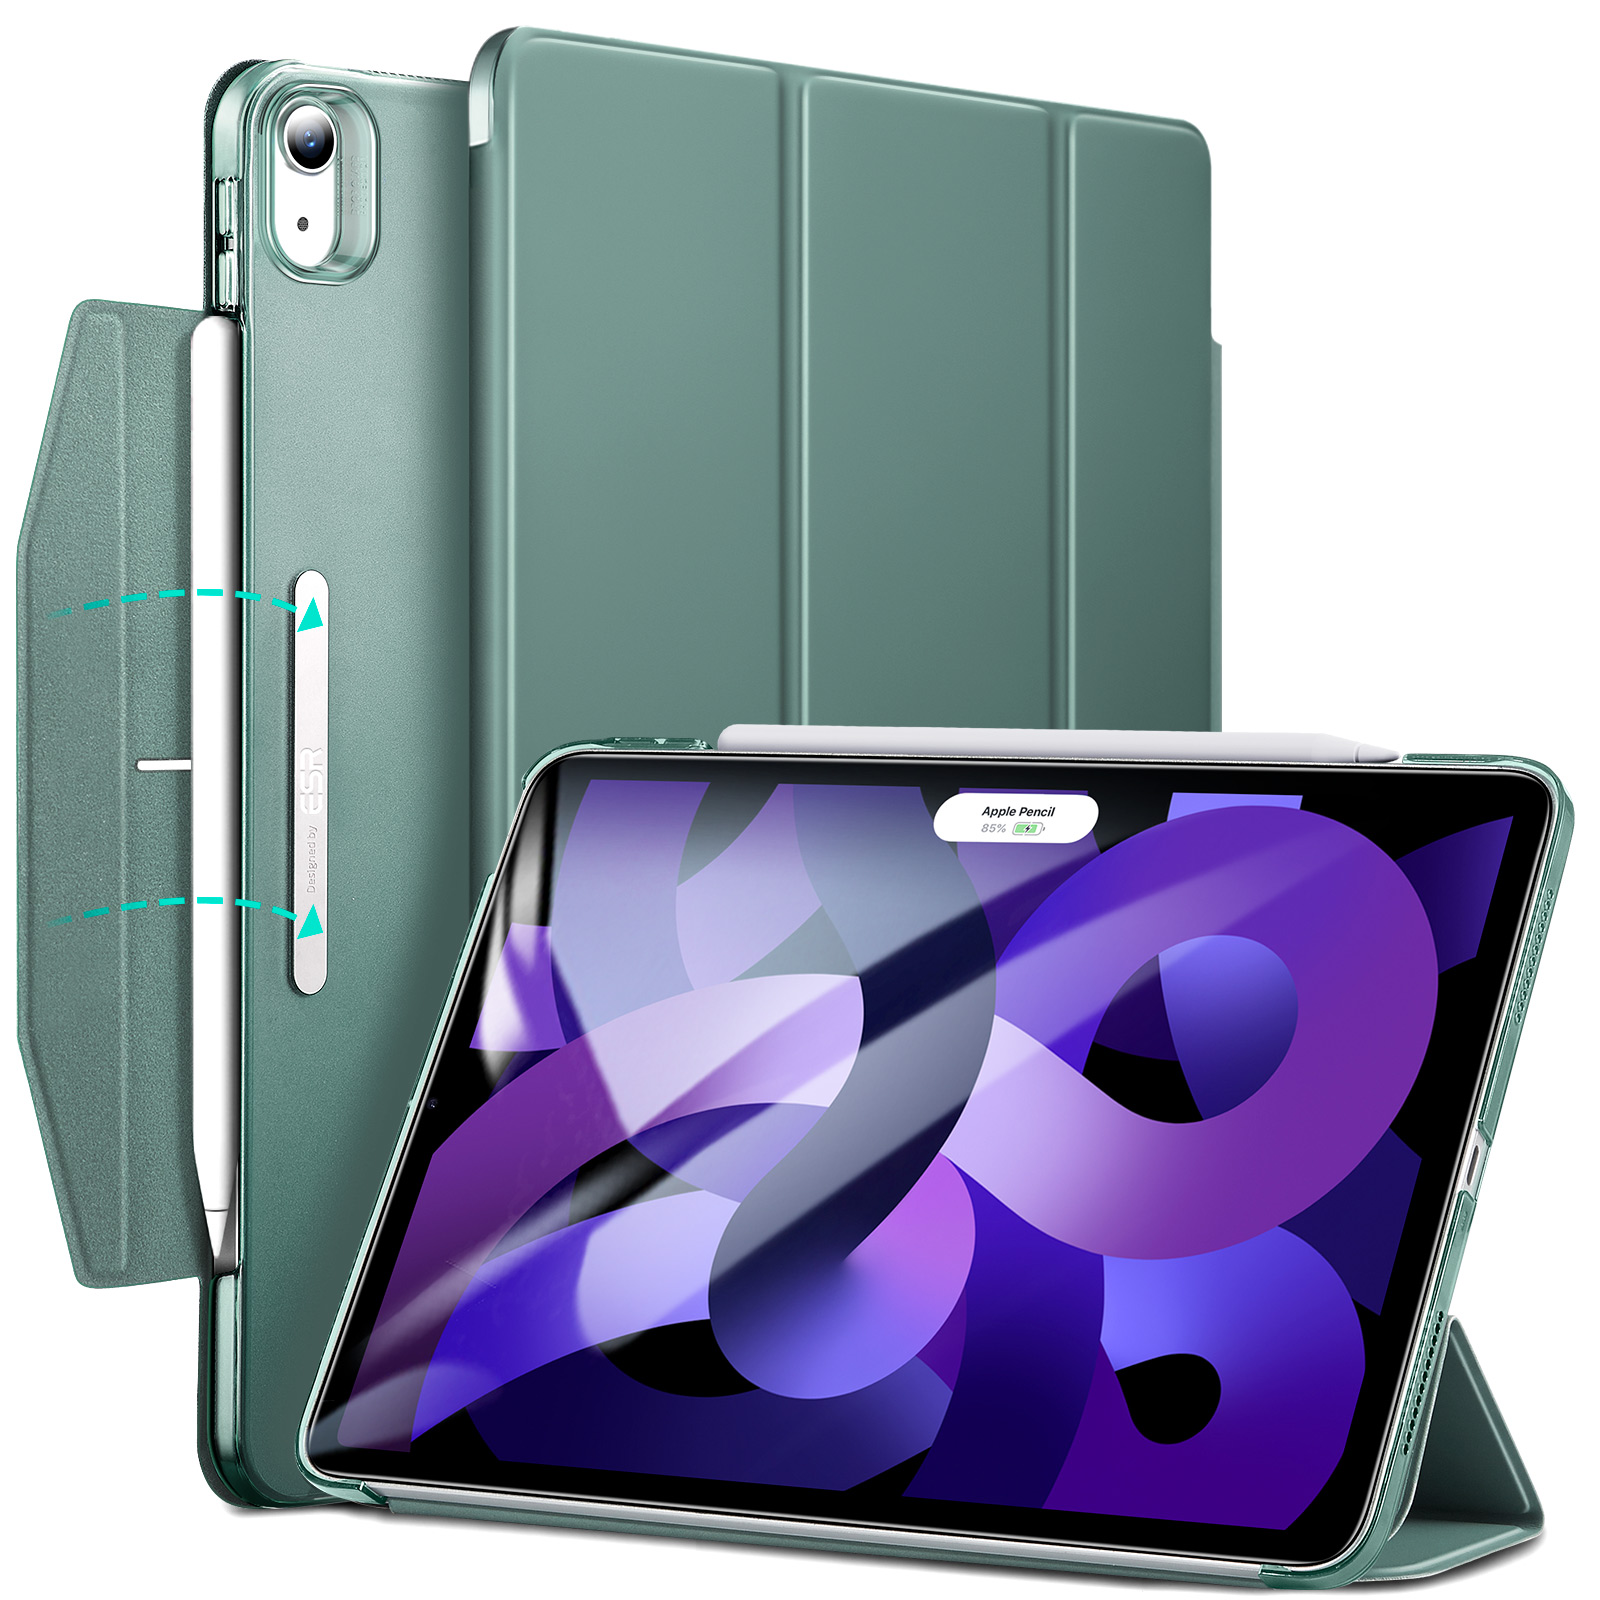 Coque de protection compatible avec iPad 10,2 et iPad Air 10,5